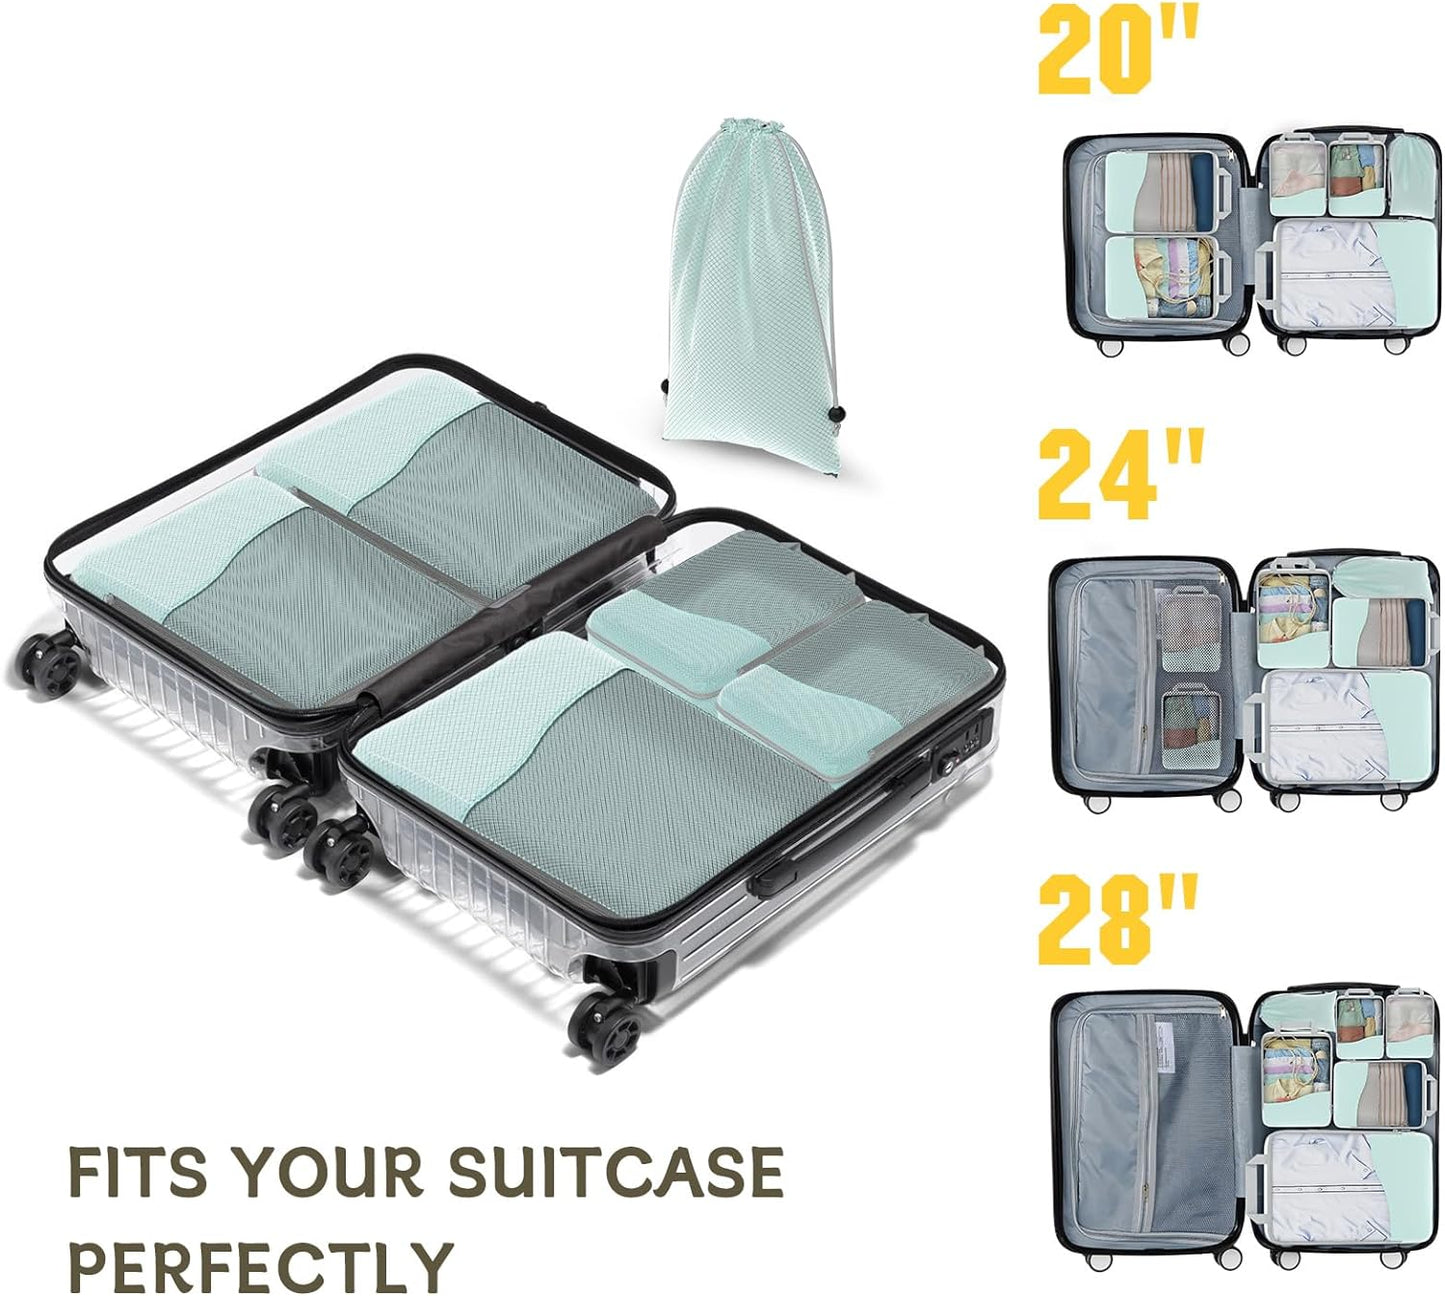 Compression Packing Cubes 6/8 Set, Dual Zipper Compression Packing Cubes for Travel, See-Through Mesh Packing Bags for Suitcases, packing cubes with shoe bag